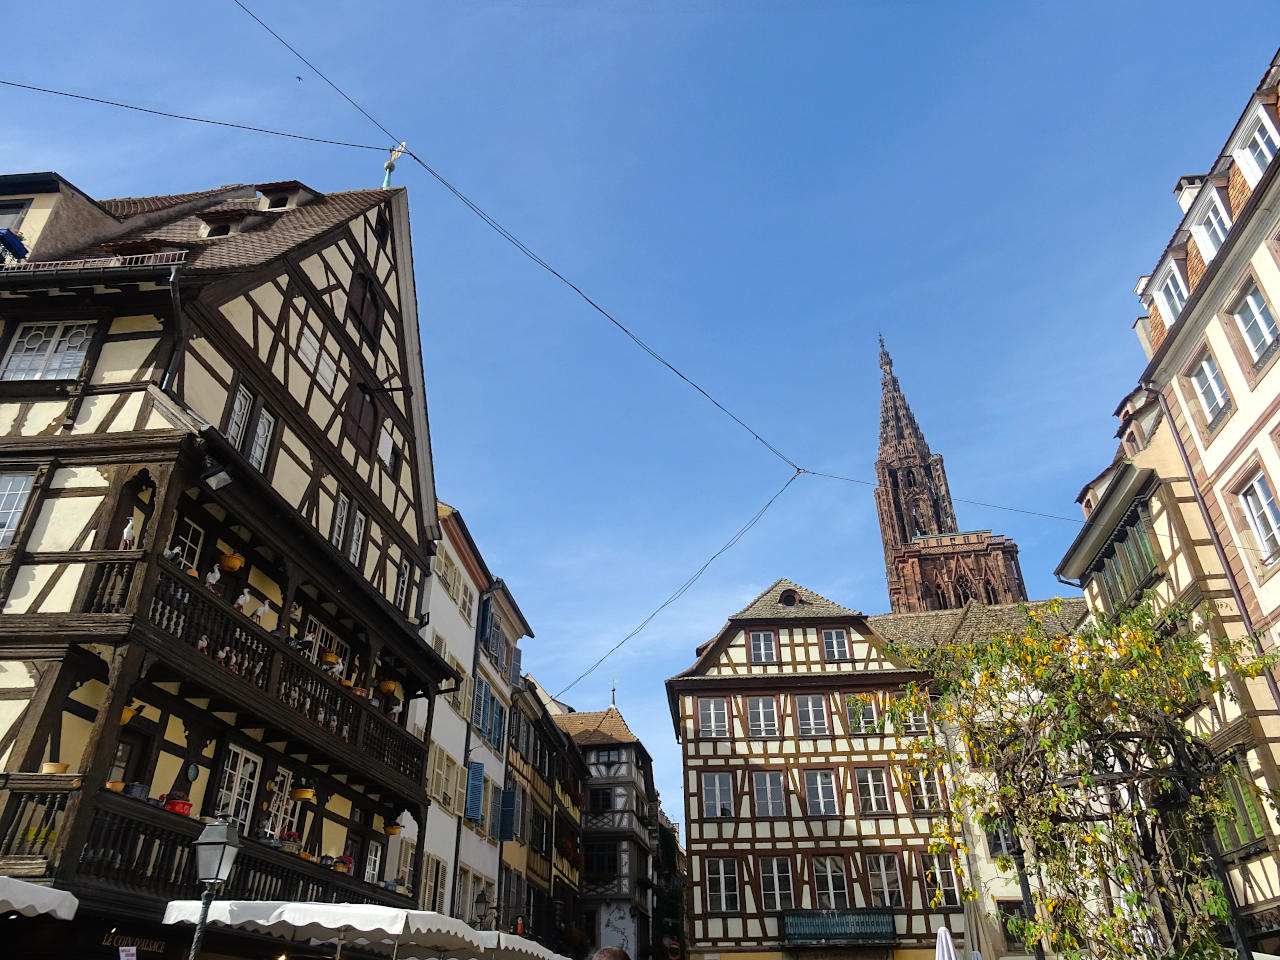 "Strasbourg